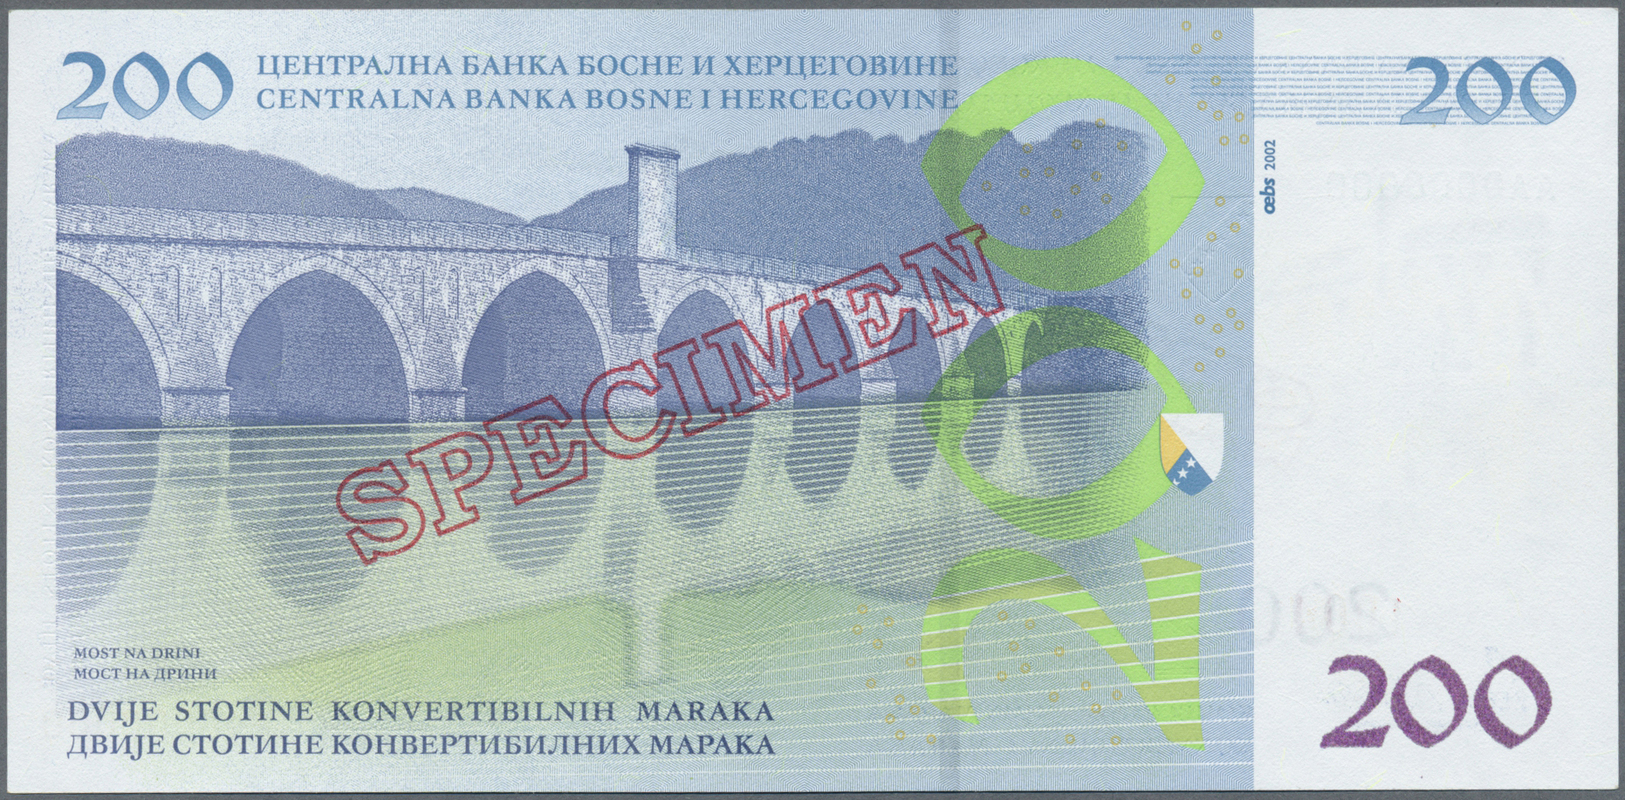 00327 Bosnia & Herzegovina / Bosnien & Herzegovina: Centralna Banka Bosne I Hercegovine 200 Konvertibilnih Maraka 2002 S - Bosnia And Herzegovina